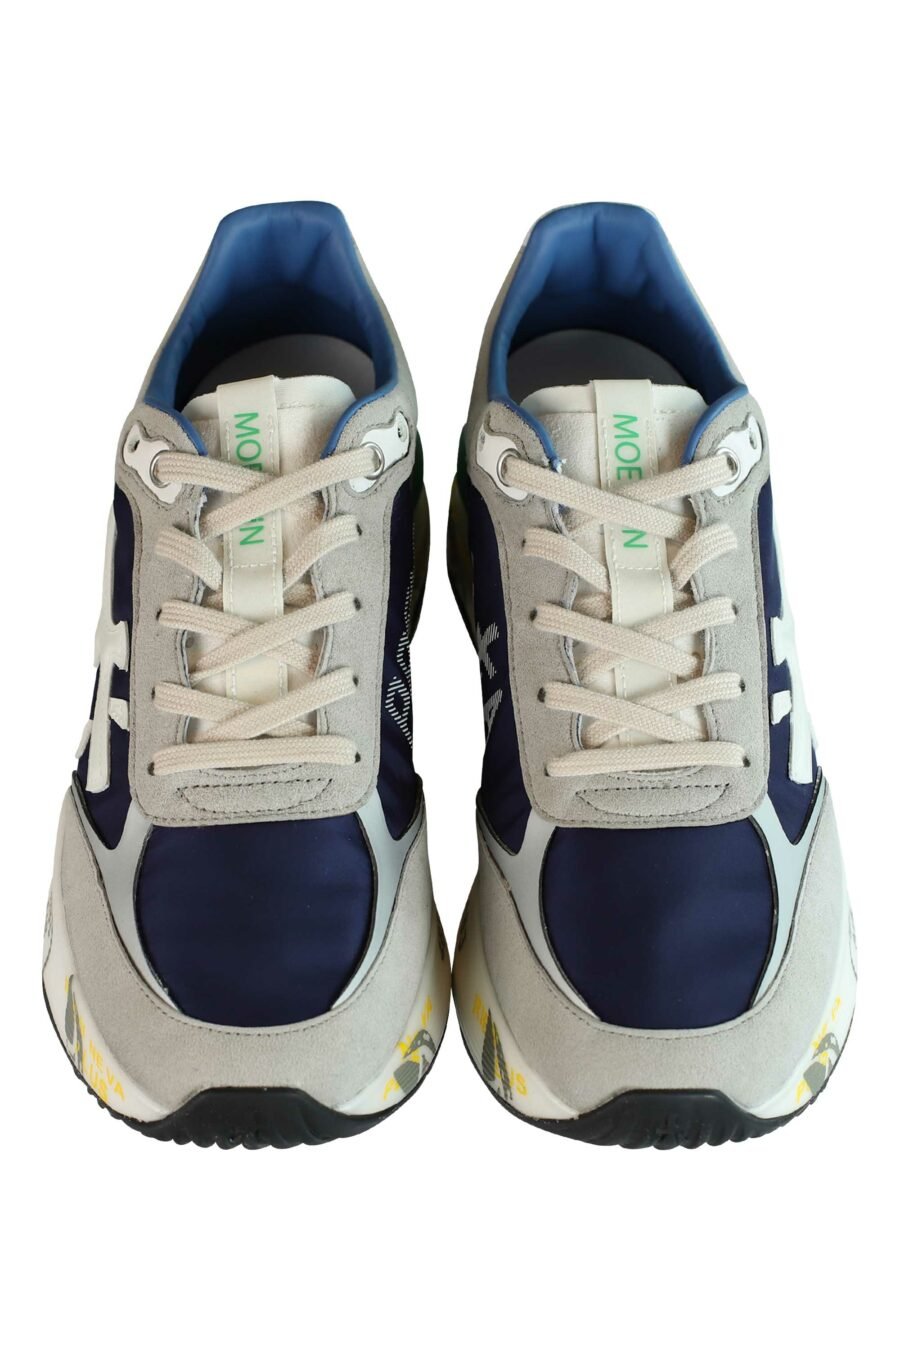 Grey trainers with dark blue "moe run 6334" - 8058326252957 5